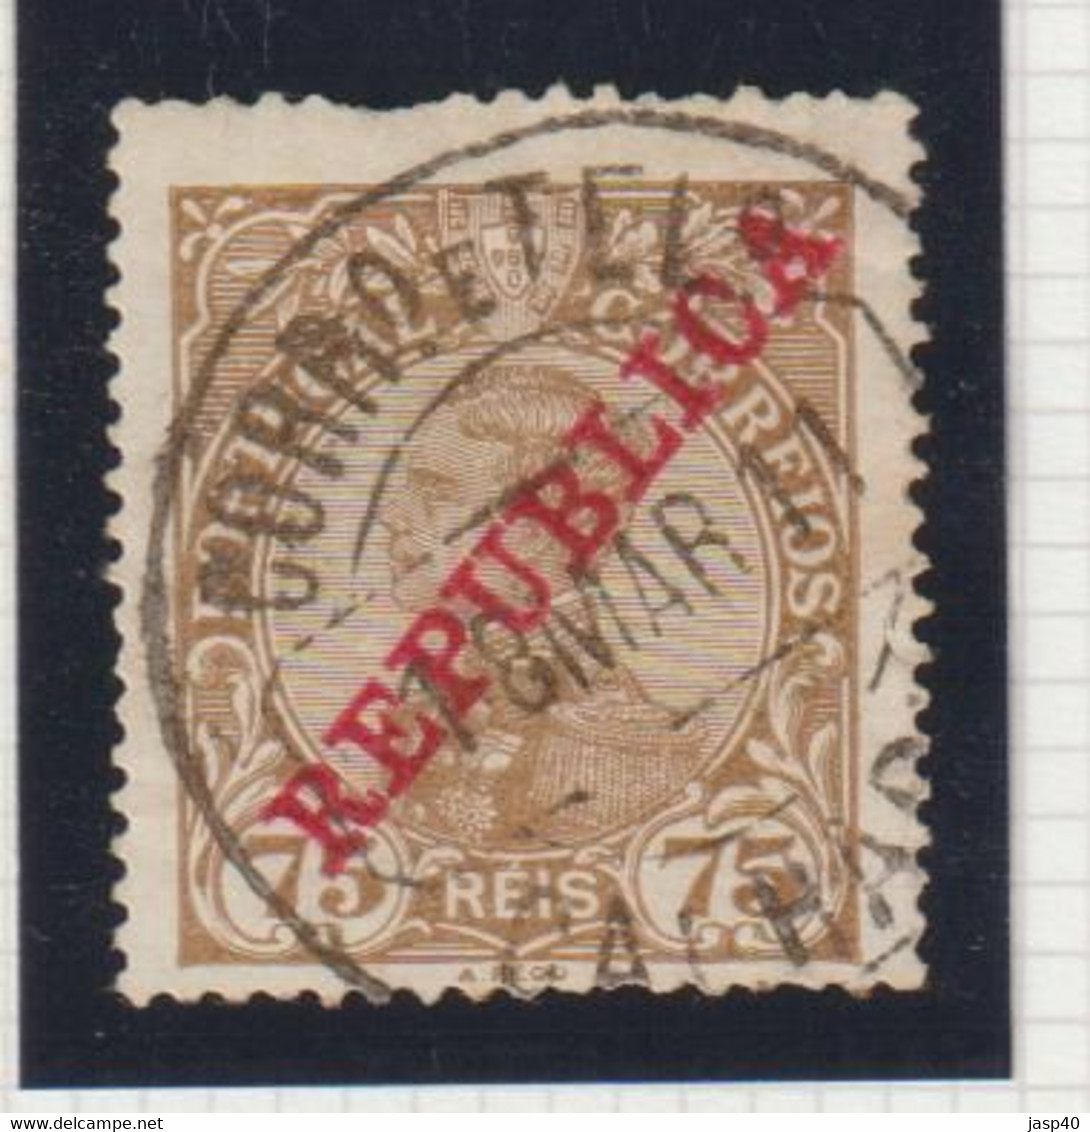 PORTUGAL 177 - USADO - CALHARIZ - Used Stamps